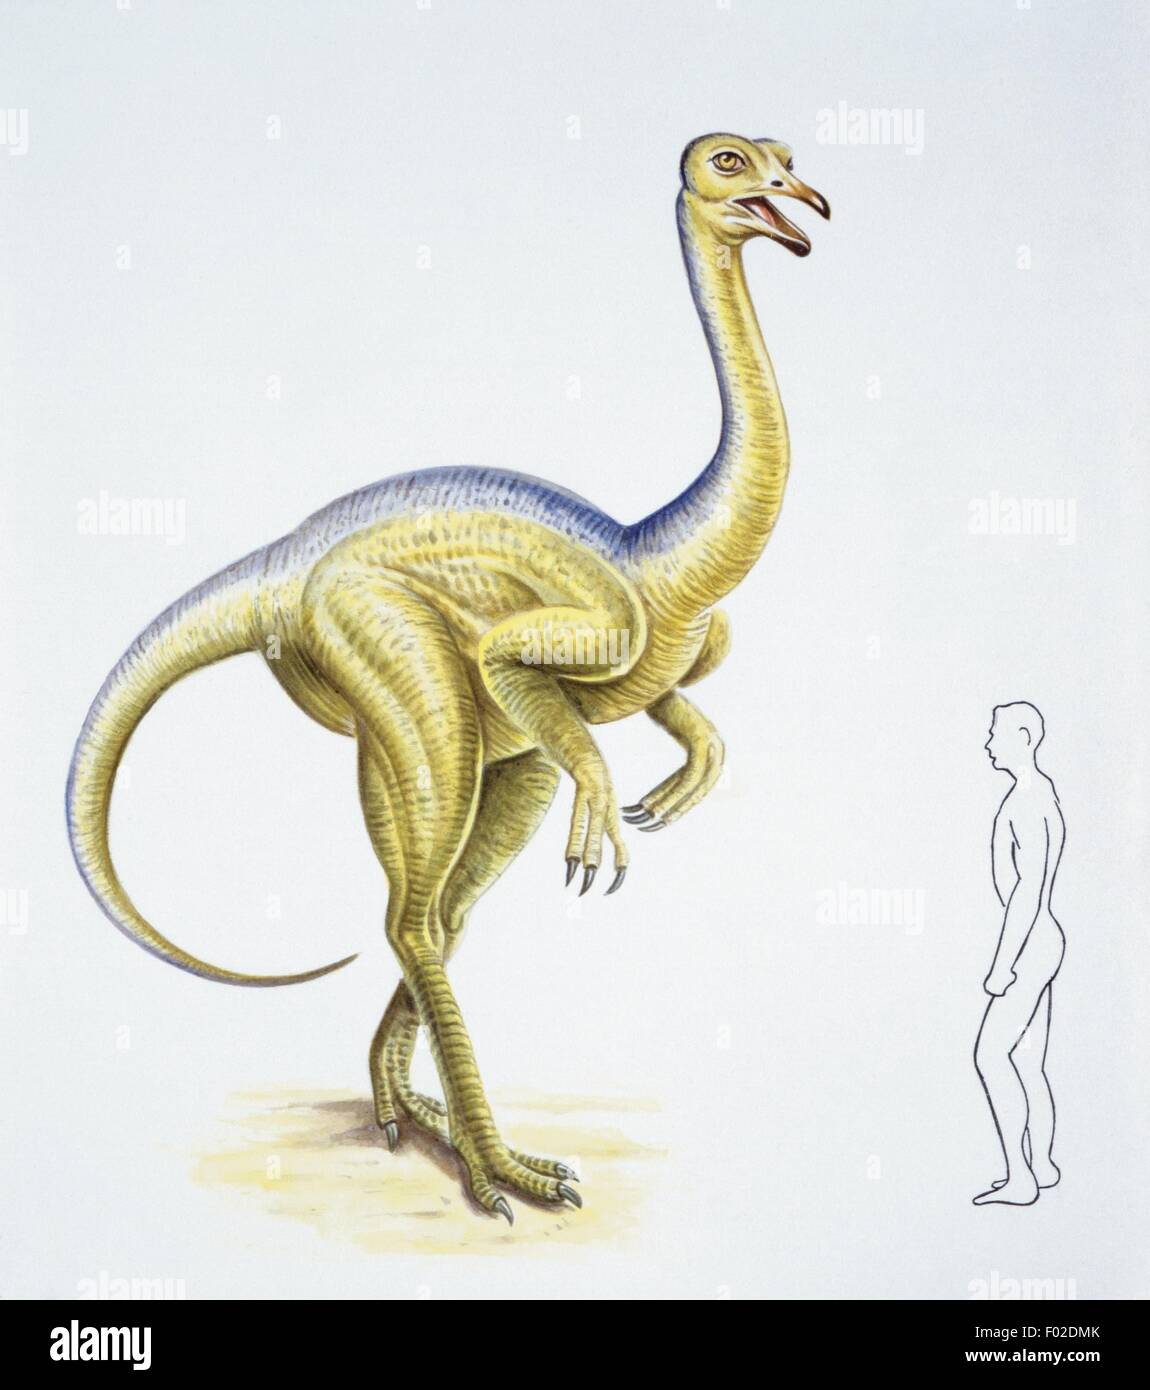 Palaeozoology - Cretaceous period - Dinosaurs - Deinocheirus - Art work Stock Photo